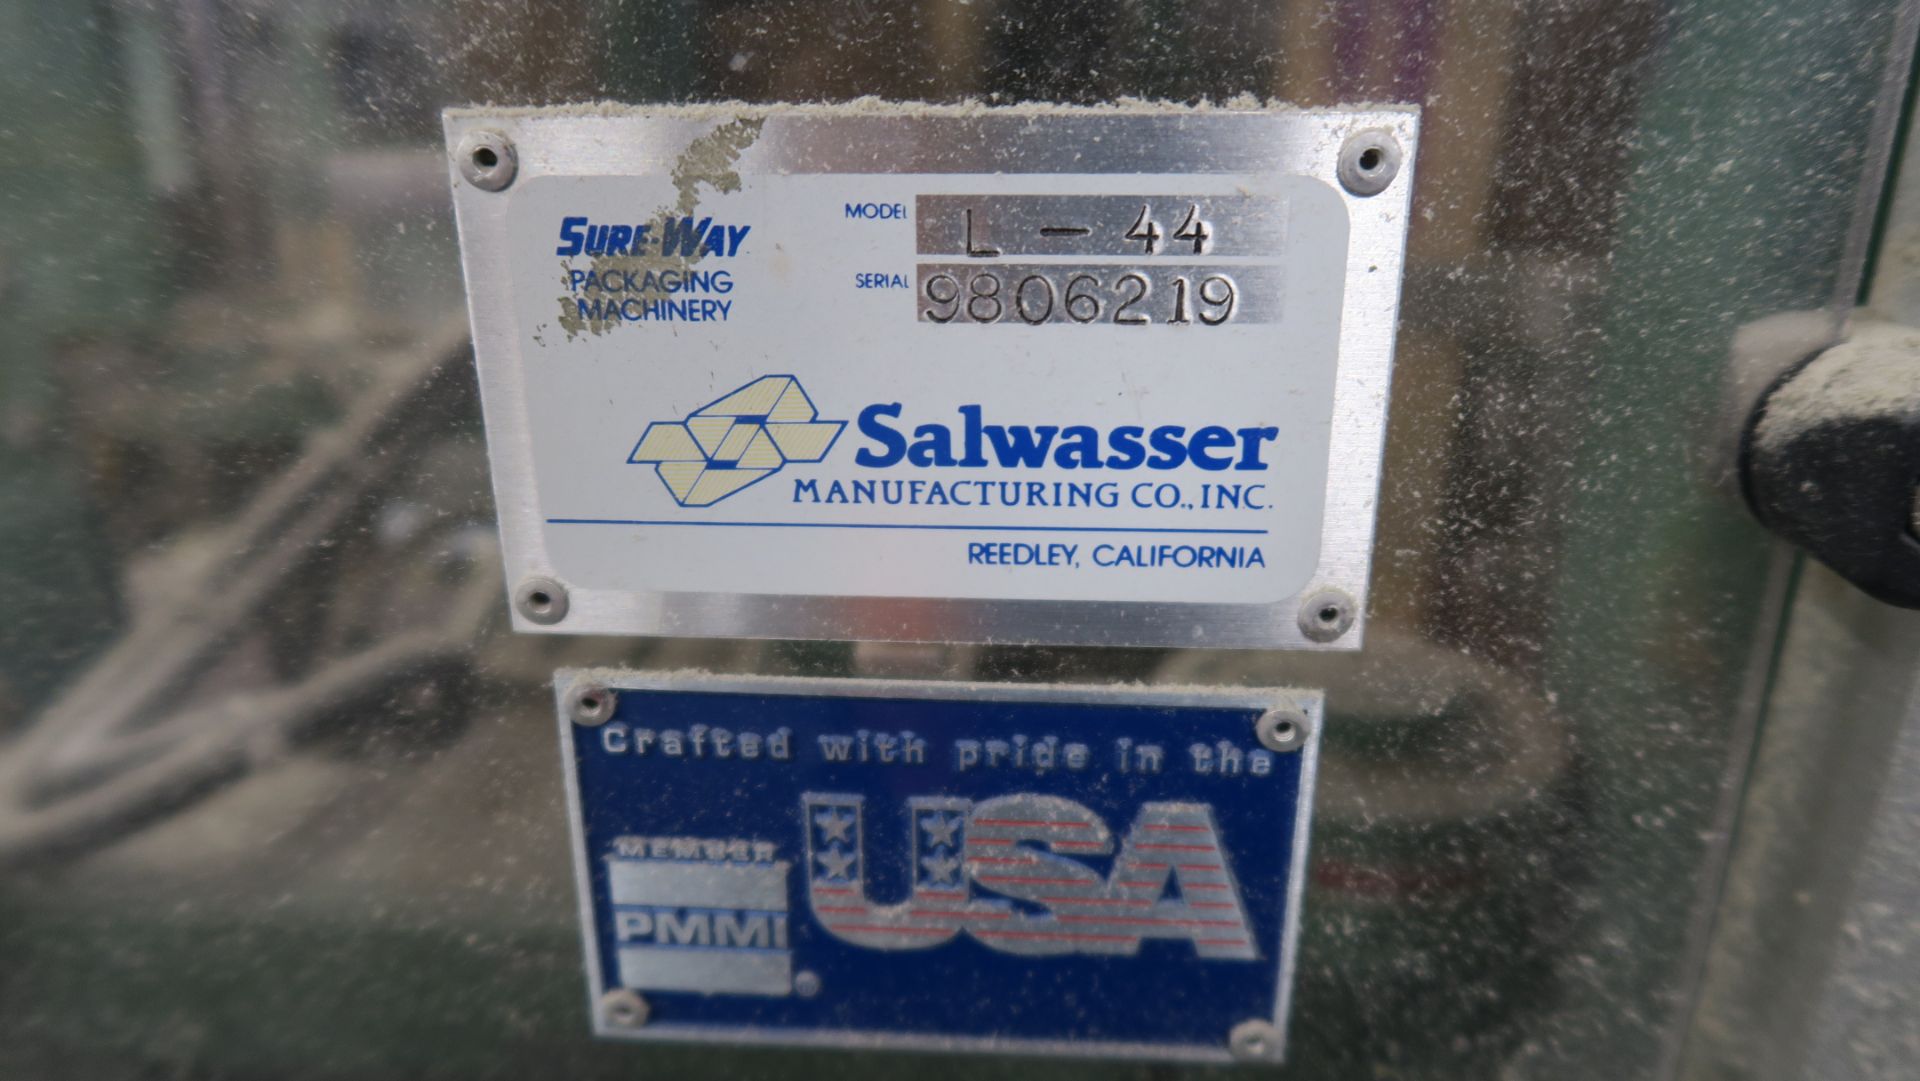 1998 SALWASSER MODEL L-44 / R-1230LSP CASE ERECTOR COMBINED WITH CASE PACKER, S/N'S 9806219, - Image 5 of 24